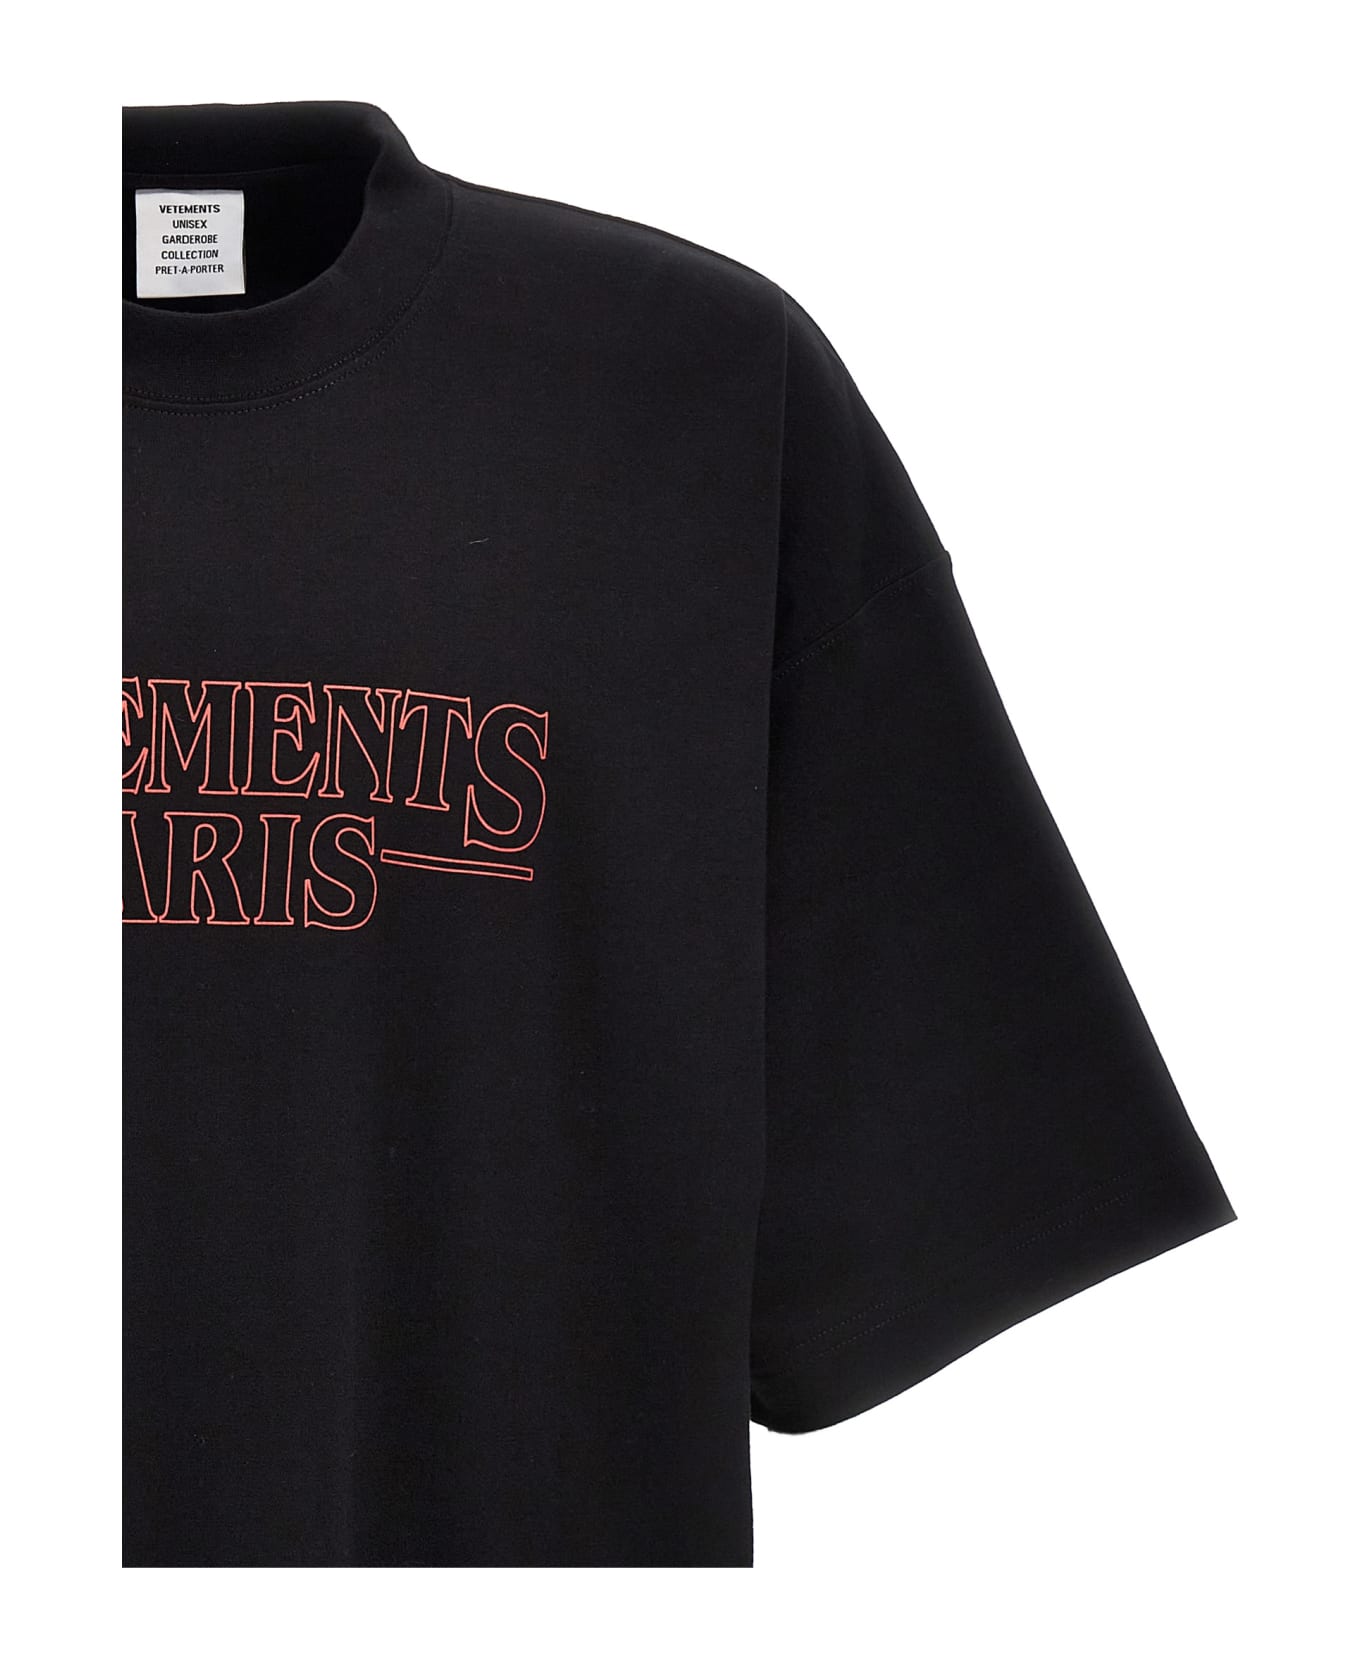 VETEMENTS Logo T-shirt - Black